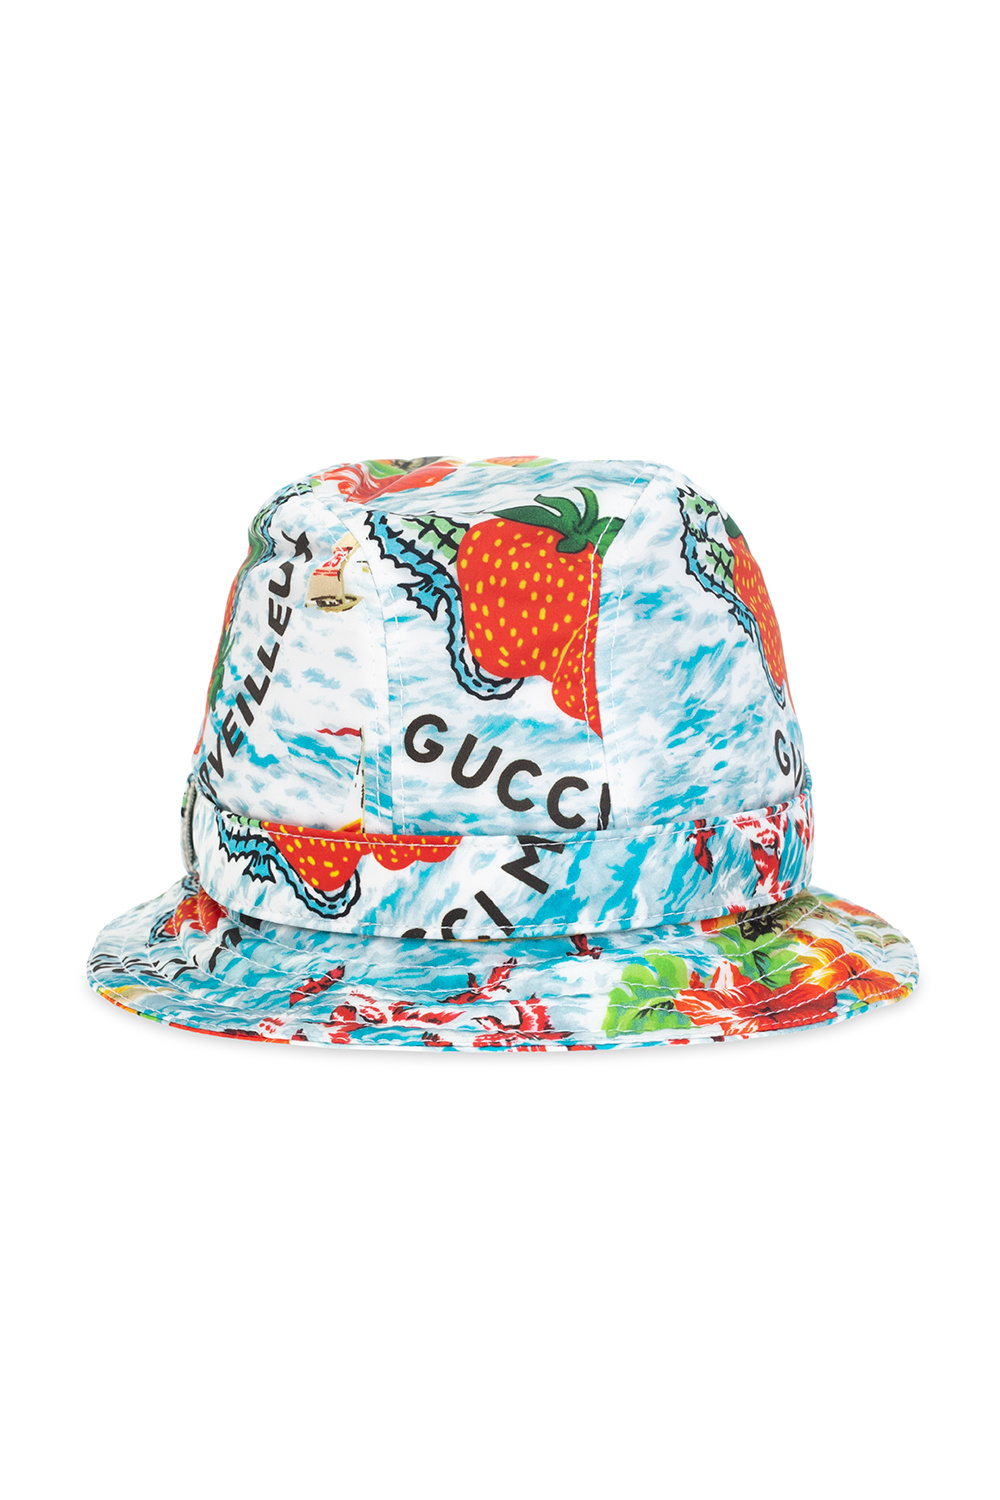 Gucci Kids ANN DEMEULEMEESTER SOFIEKE HAT